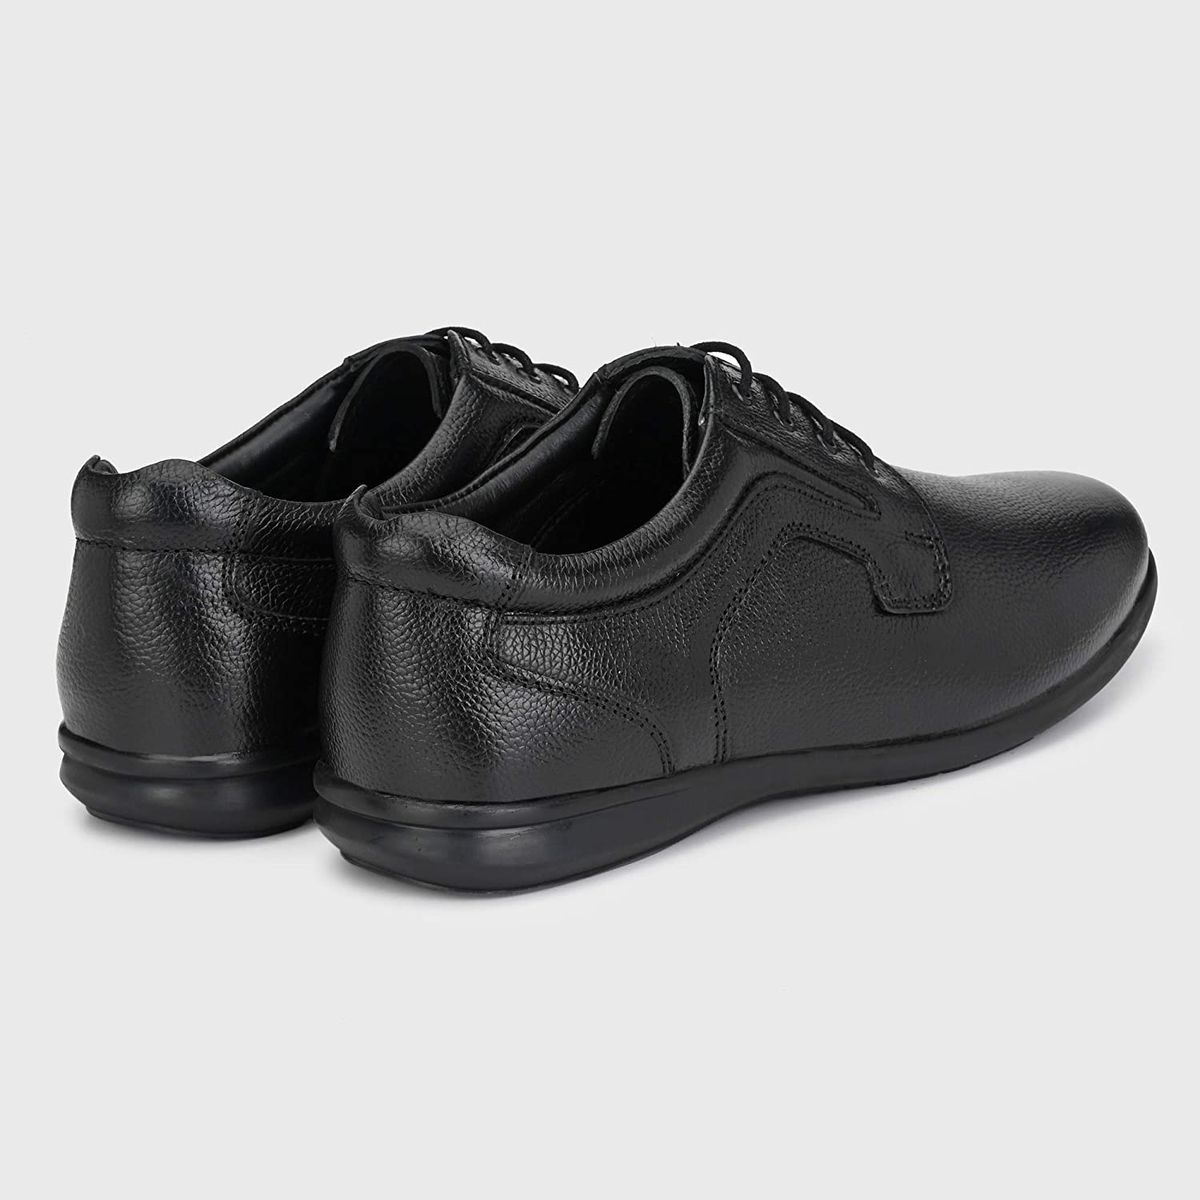 Buy Burwood Men BWD 194 Black Leather Formal Shoes-6 UK (40 EU) (BW at  Amazon.in